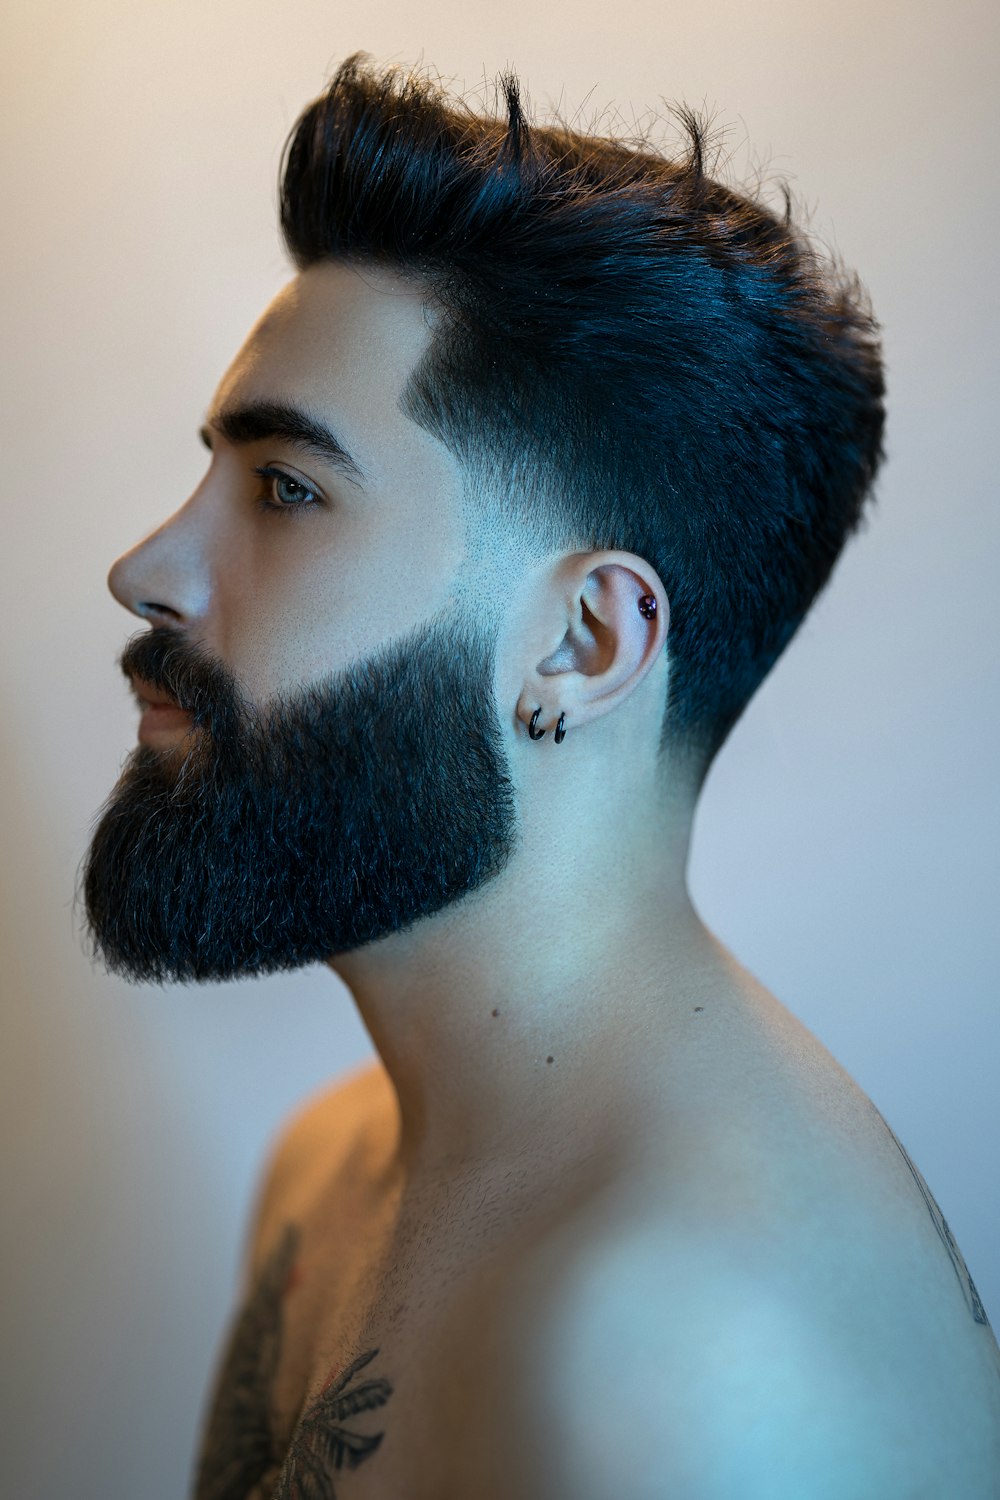 man with black and white beard photo – Free Hair cut Image on Unsplash